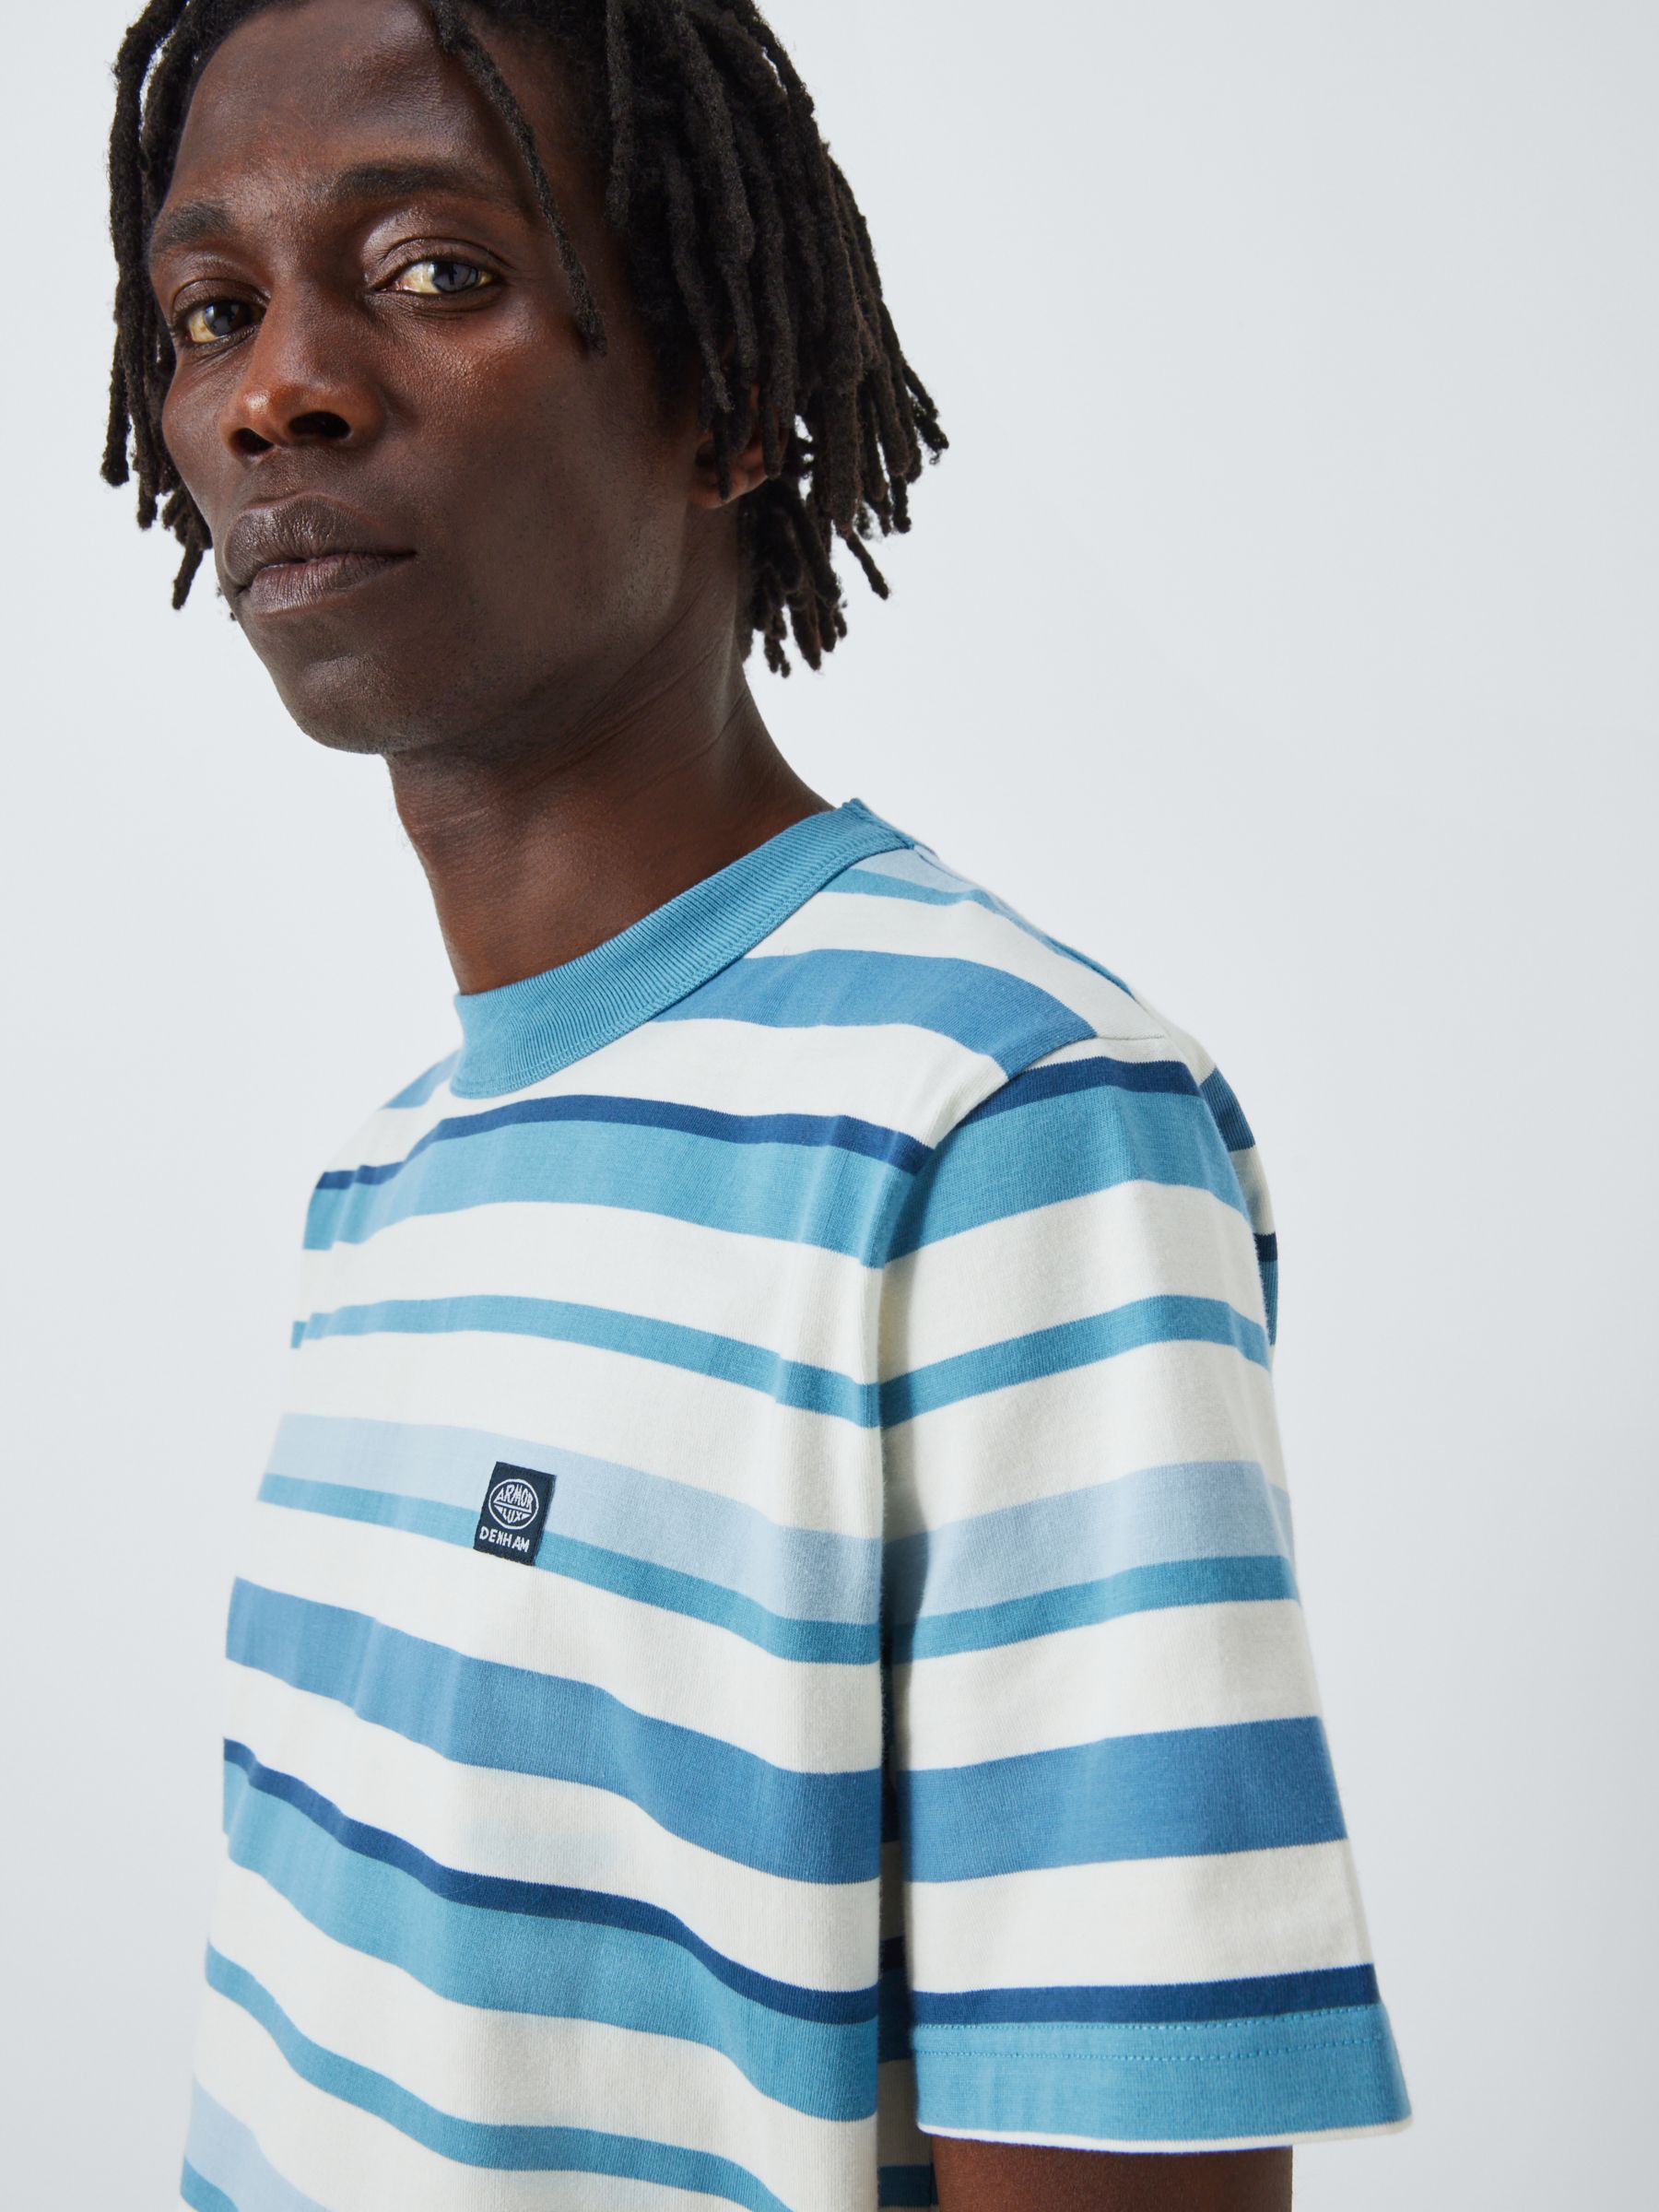 Armor Lux x Denham Short Sleeve Comfort Stripe T-Shirt, Egret/Blue, L